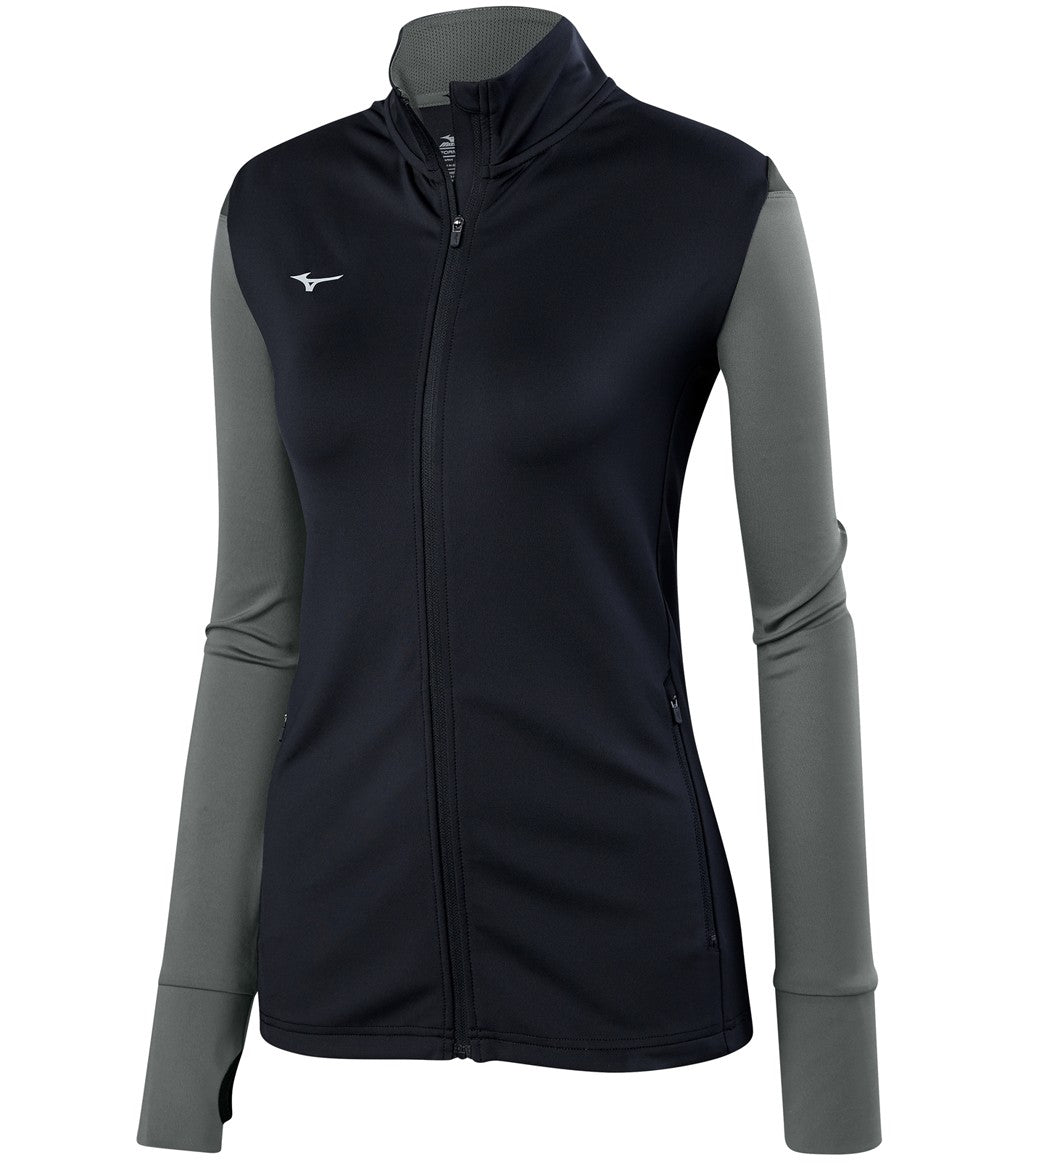 Mizuno Women's Horizon Full Zip Volleyball Jacket - Black/Grey/Charcoal Large - Swimoutlet.com